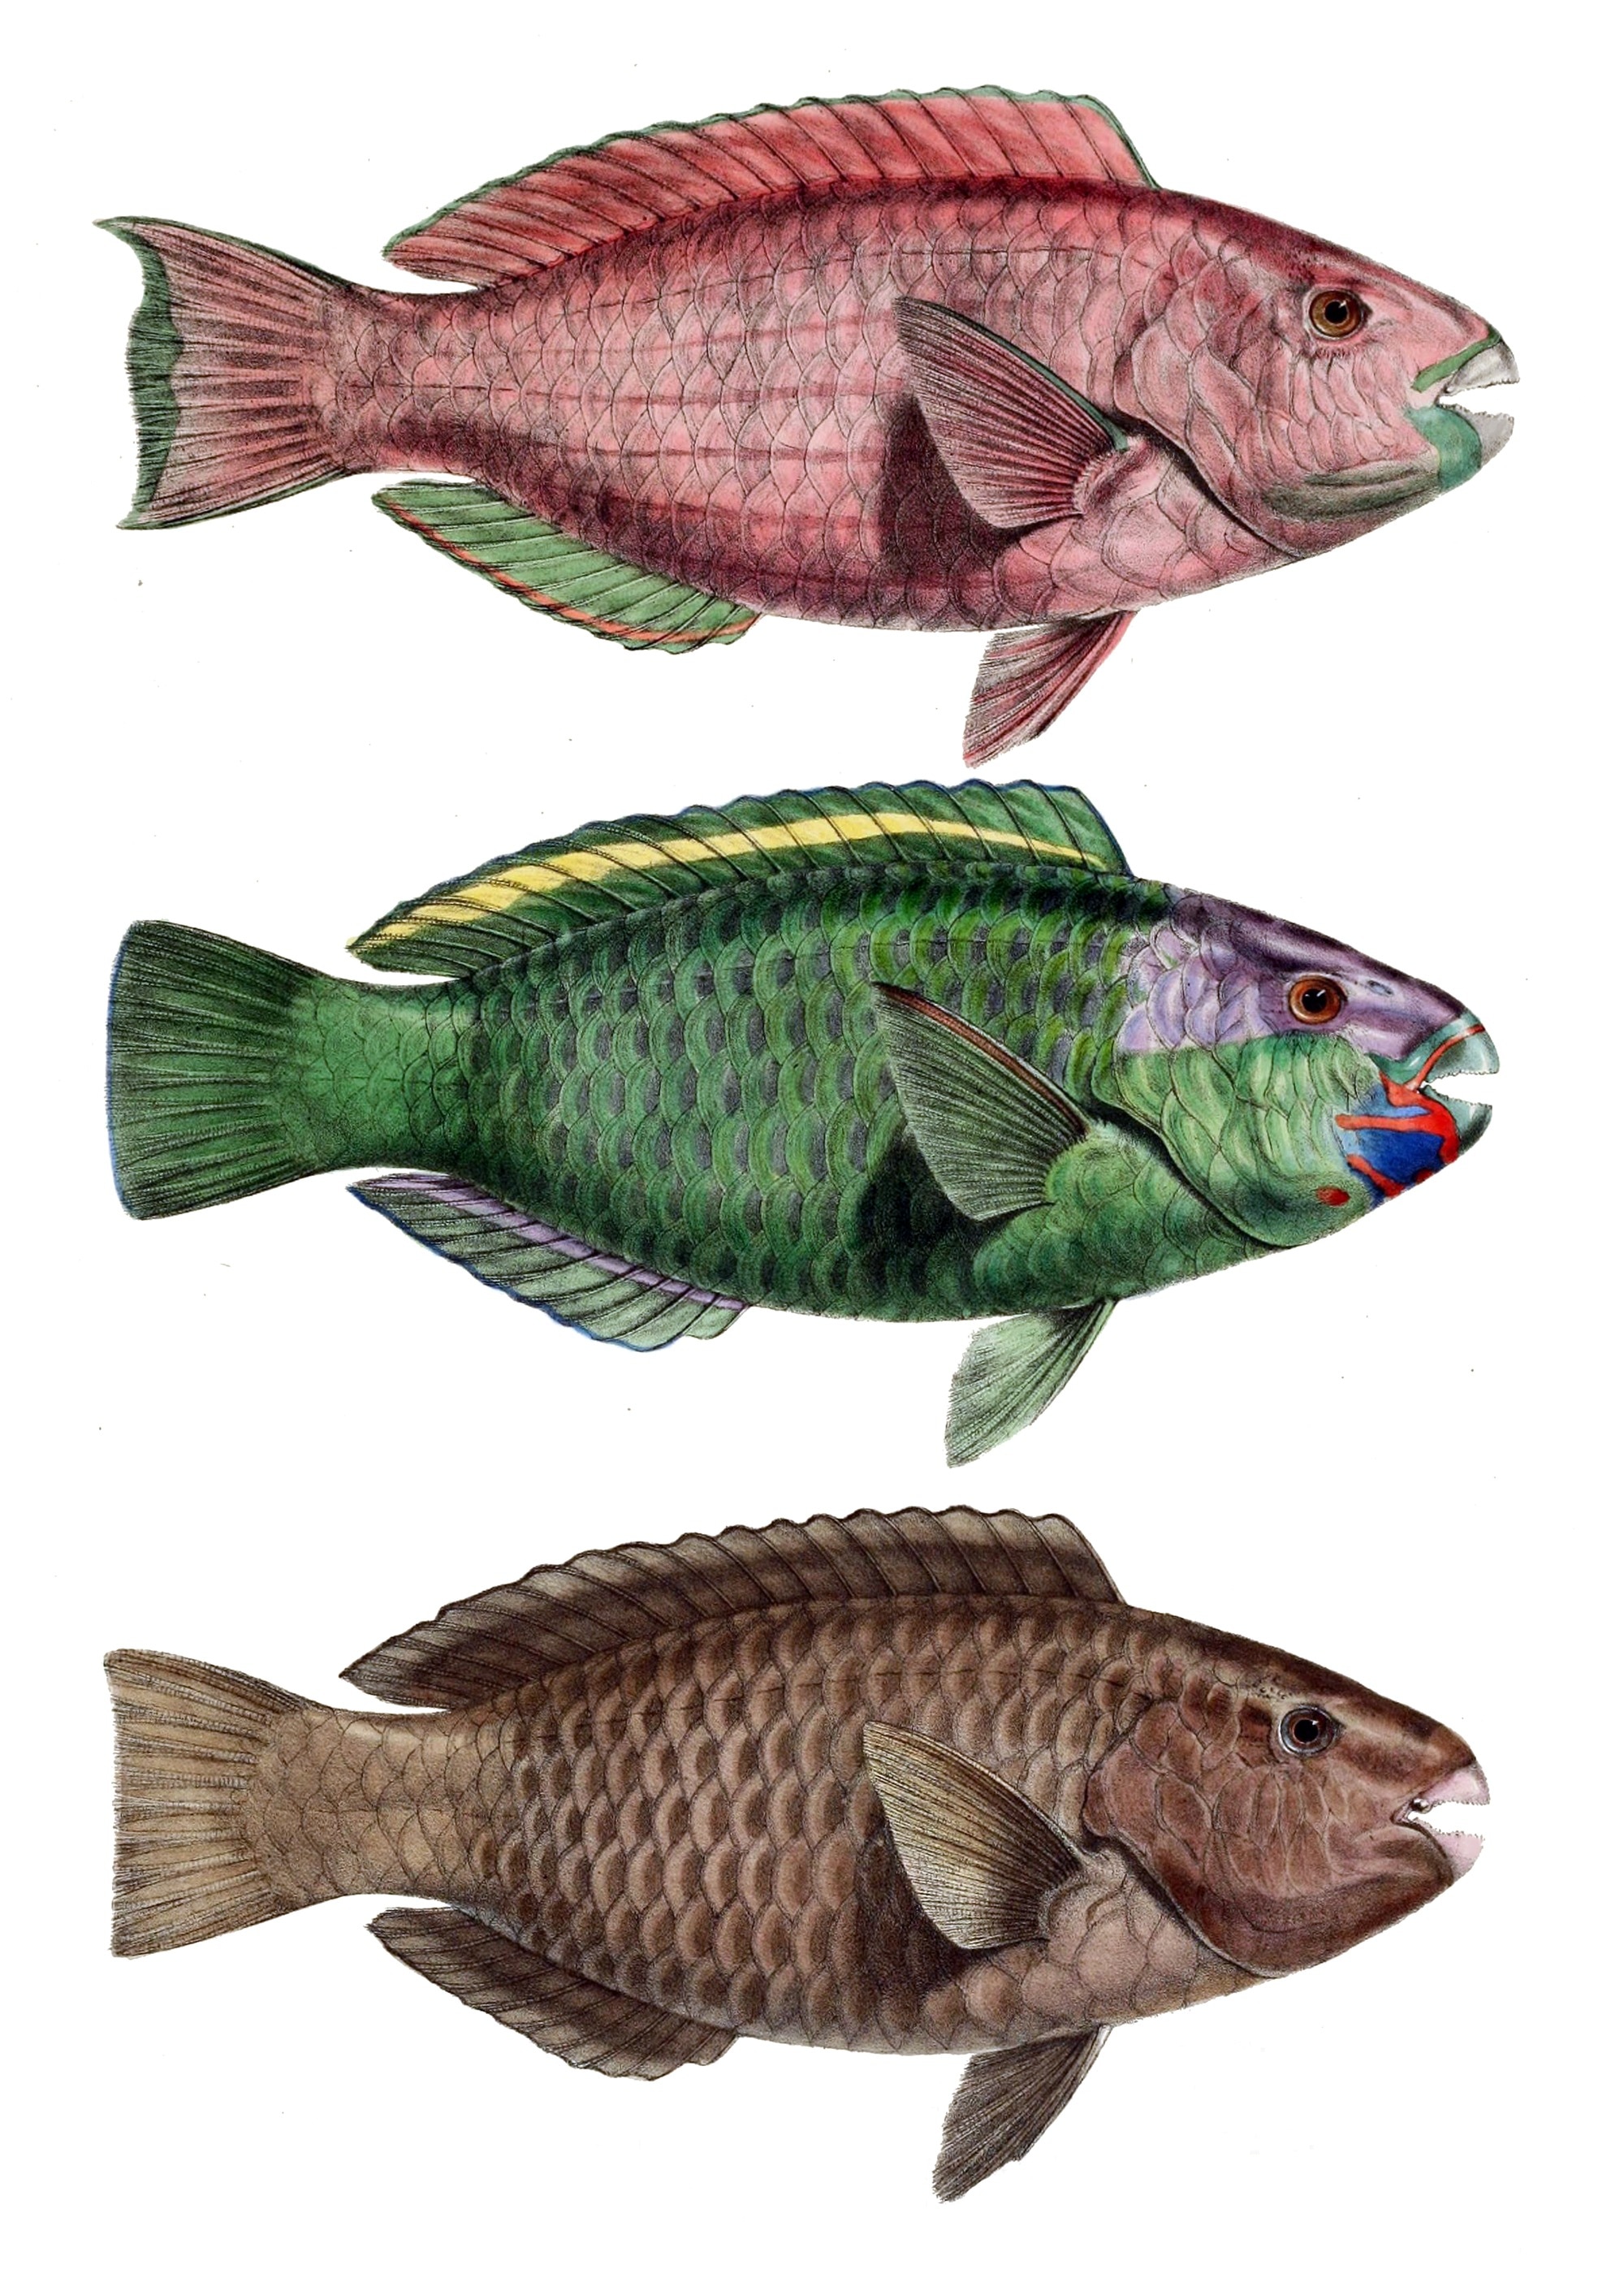 3 fish illustration